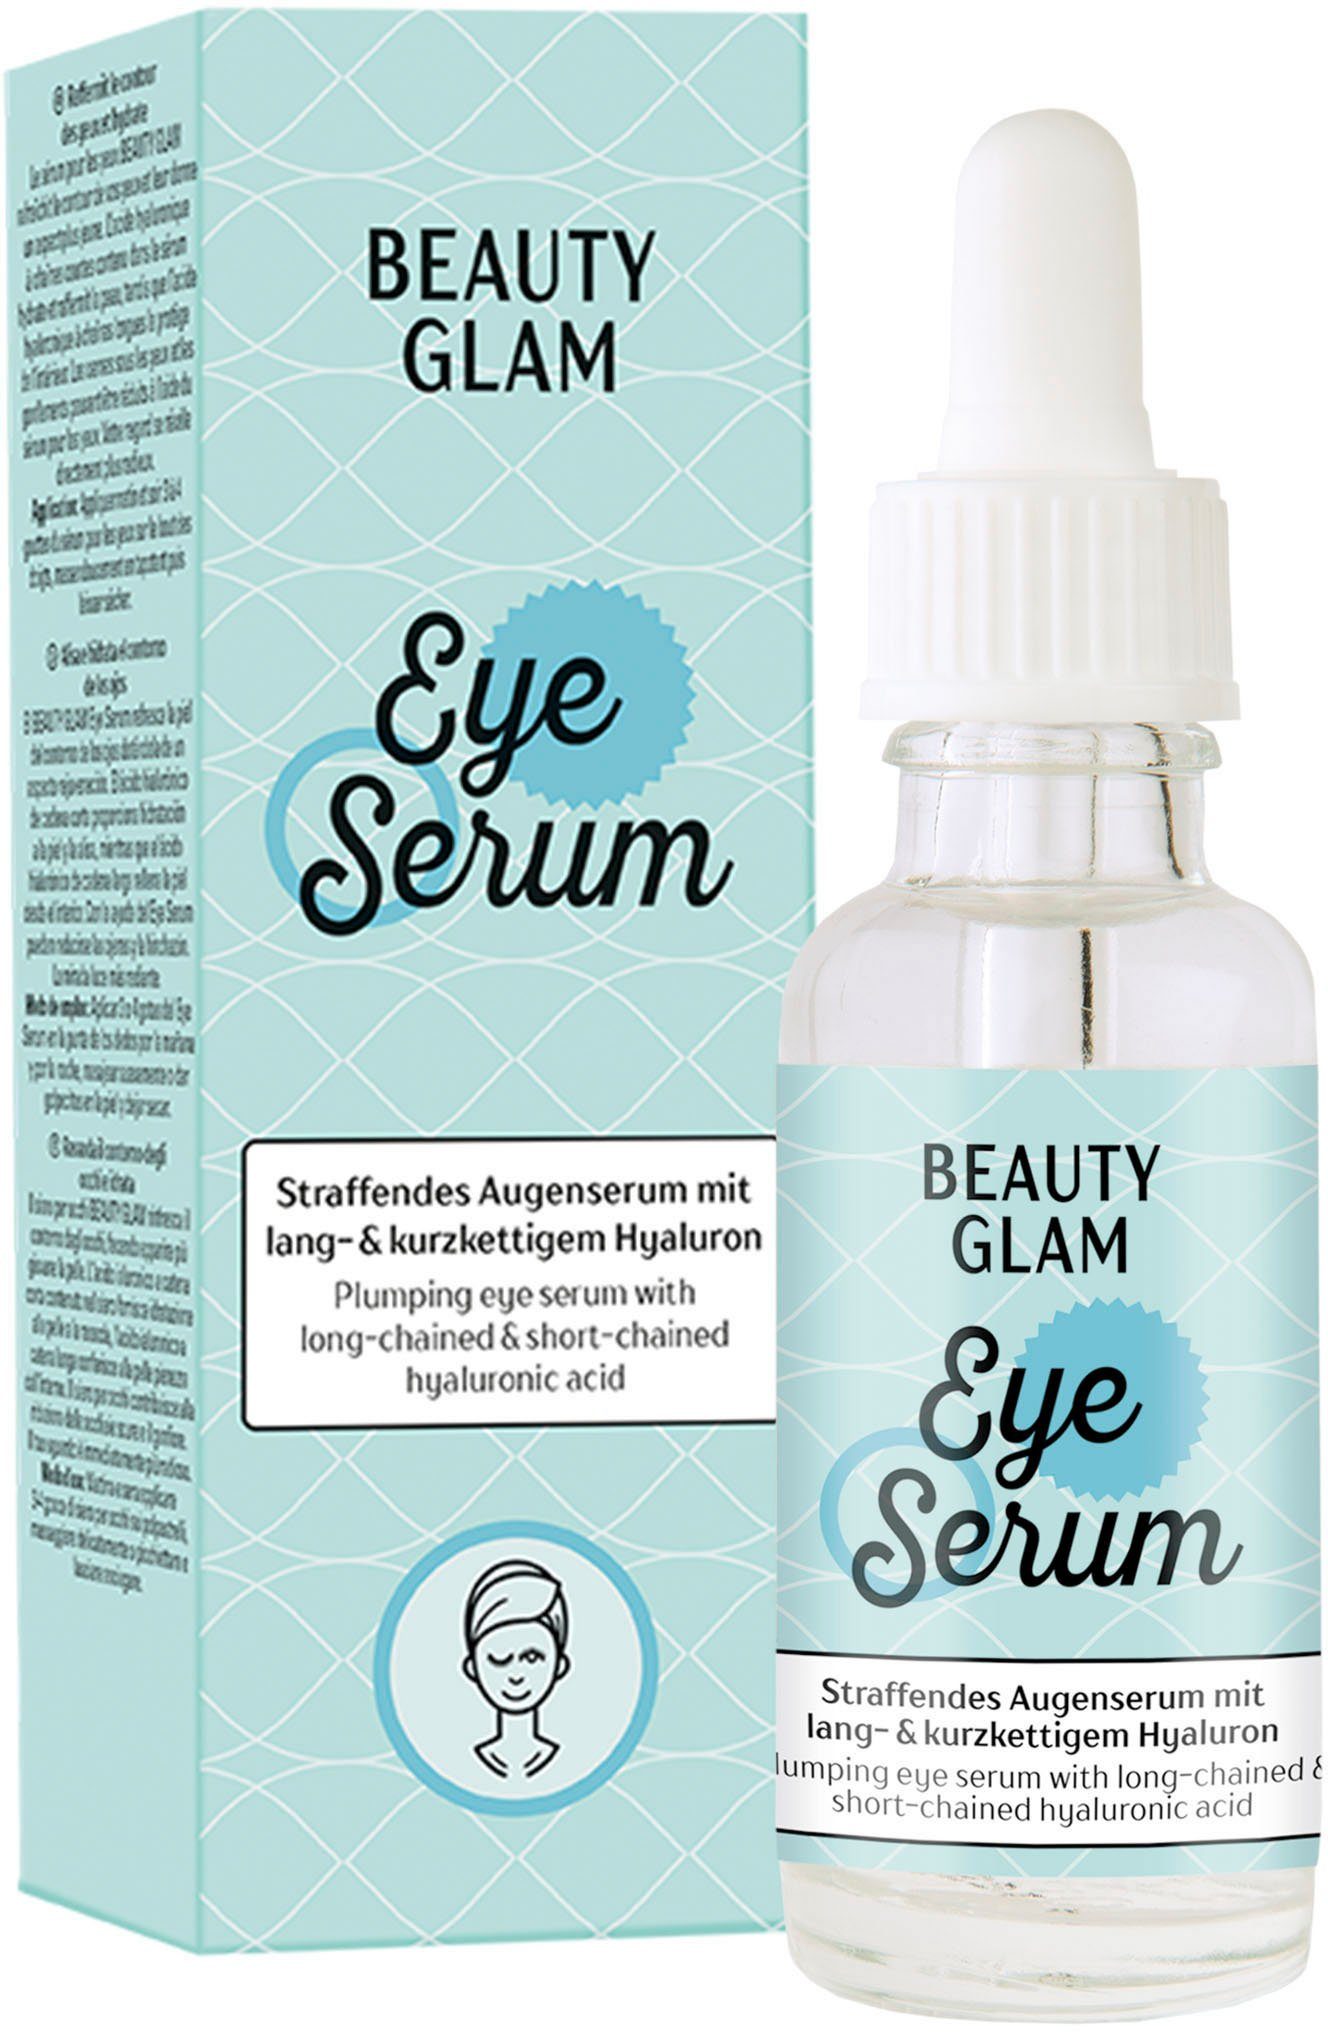 GLAM Glam Serum BEAUTY Beauty Augenserum Eye